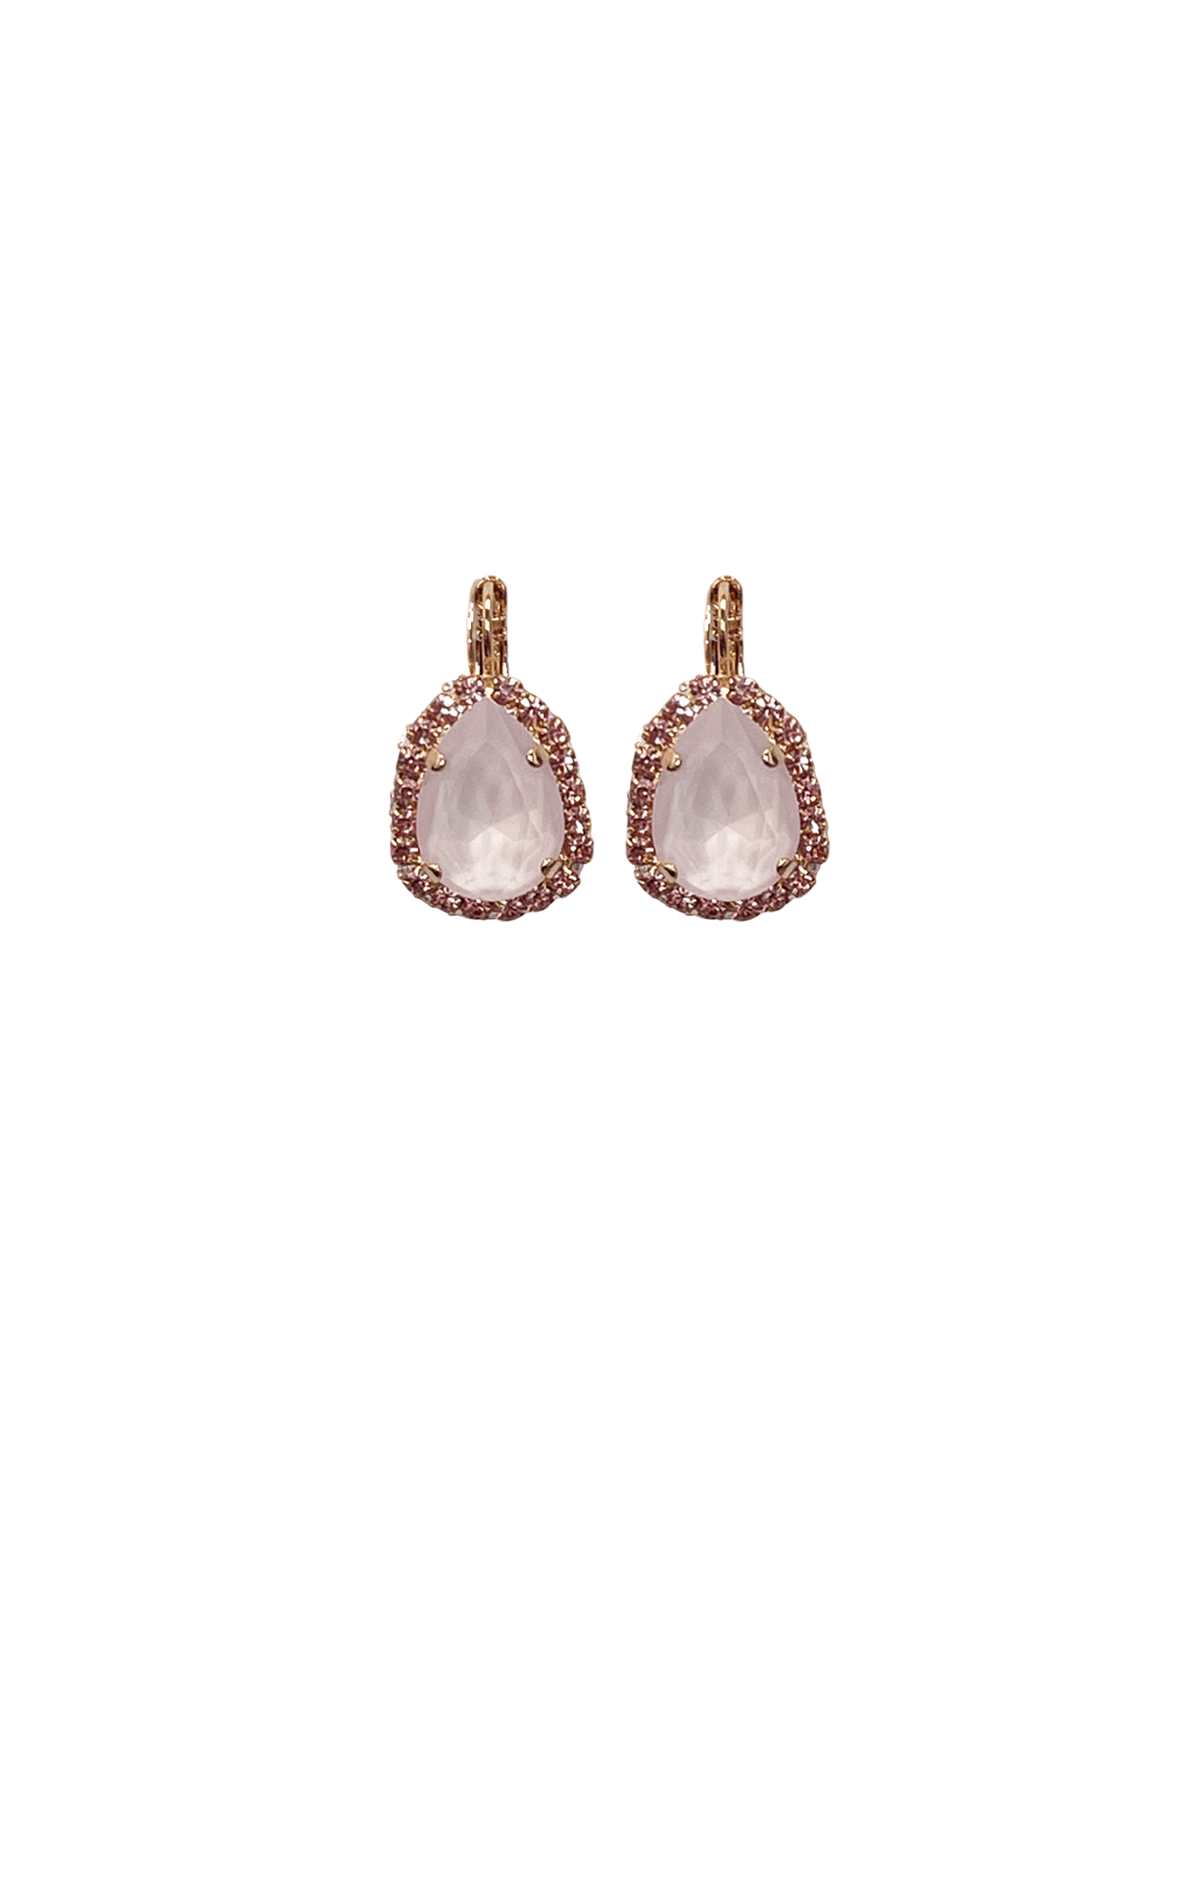 ACCESSORIES Earrings One Size / Pink PARIS EARRING IN PINK OPALITE